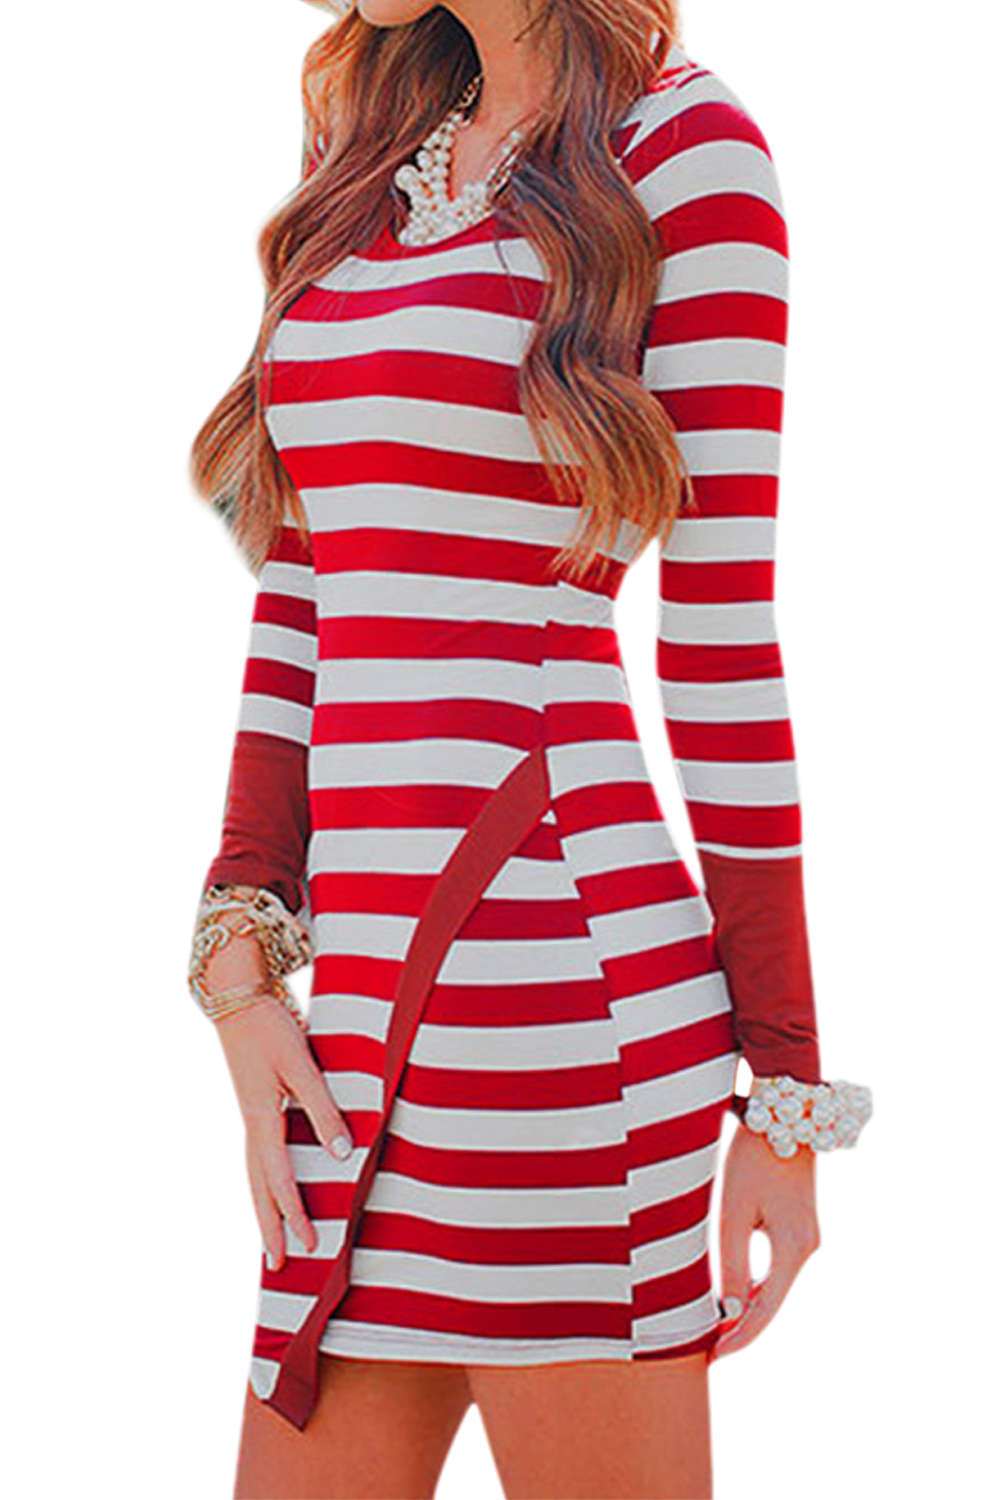 Iyasson Striped Long Sleeve Bodycon Dress